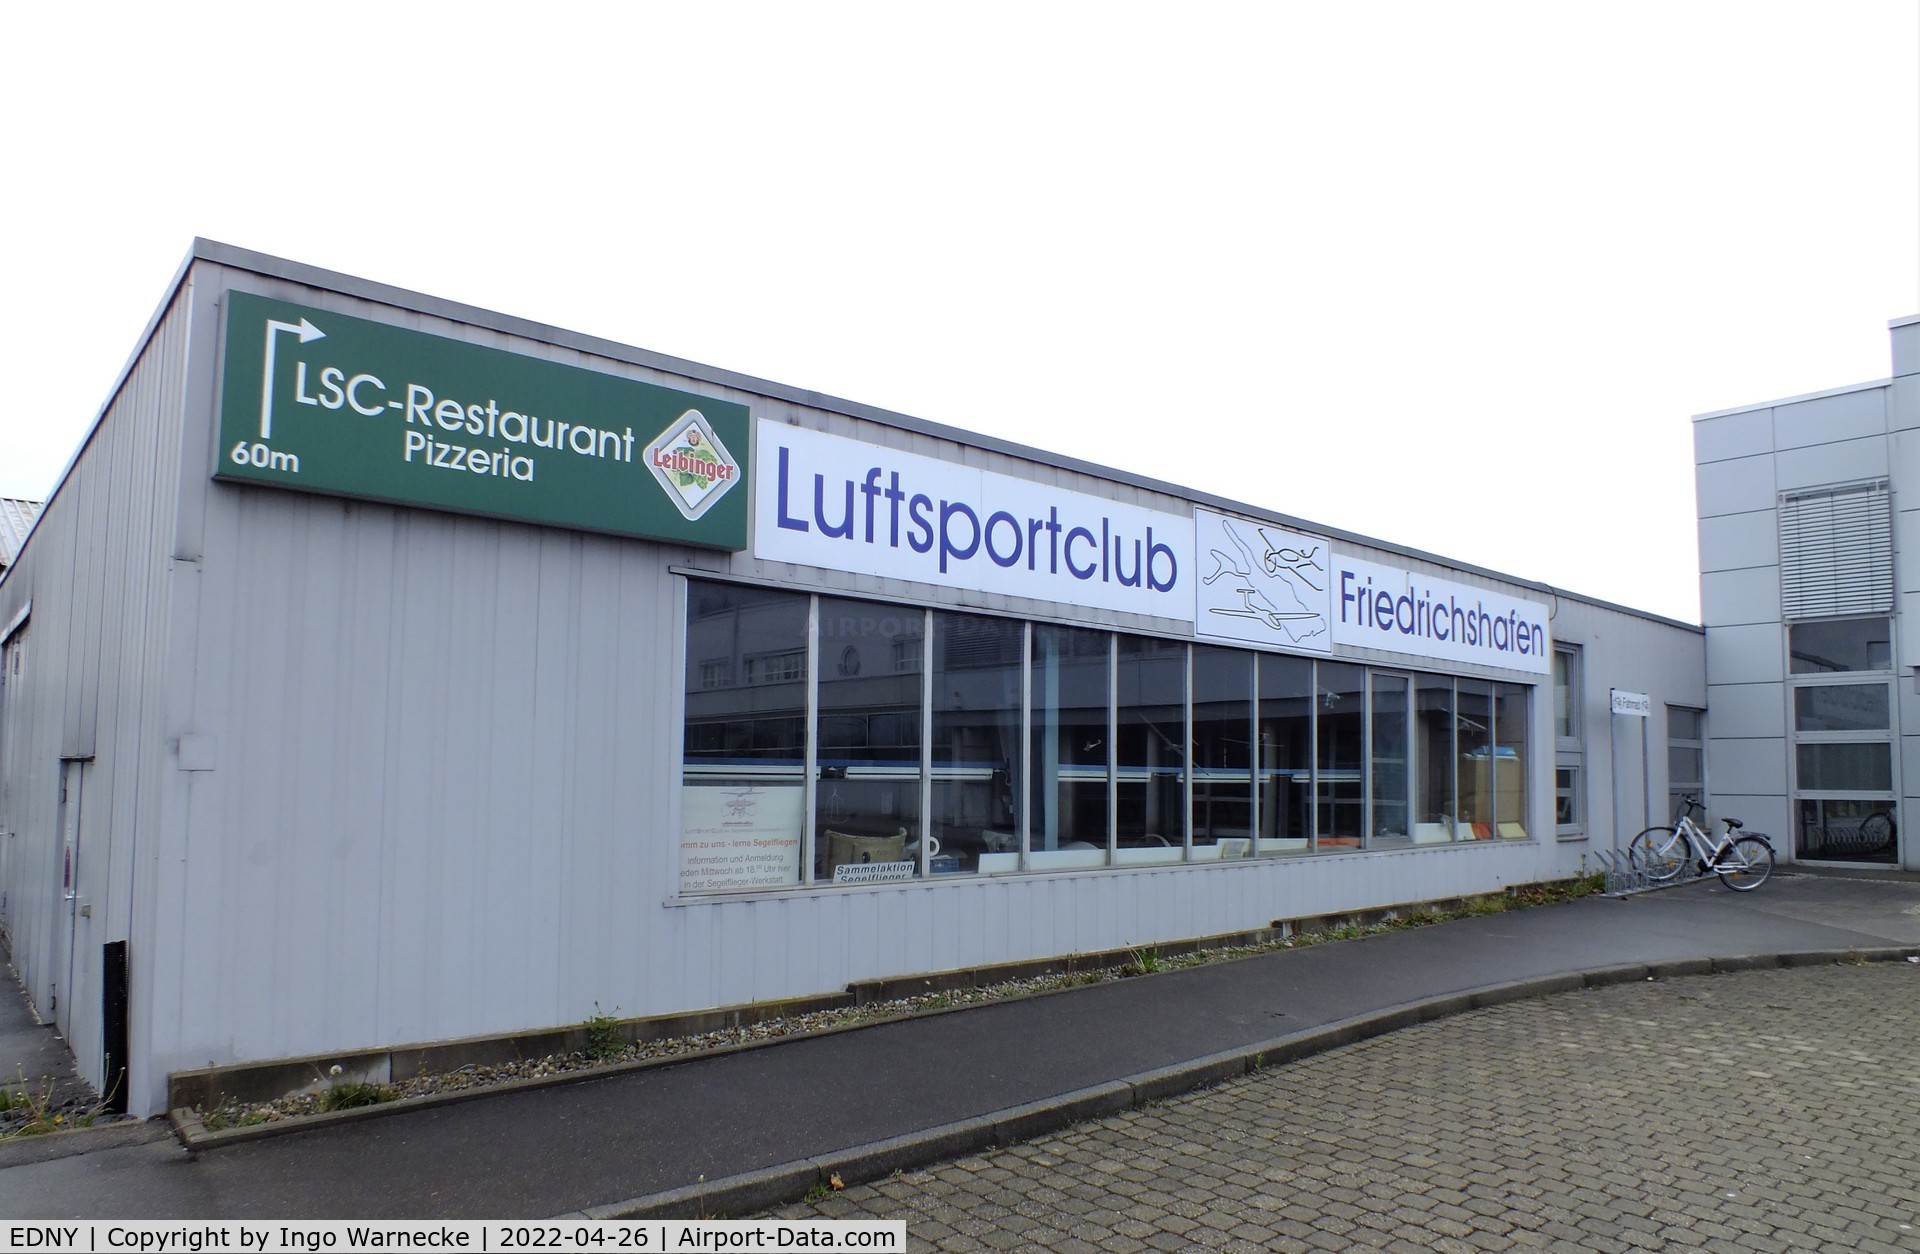 Bodensee Airport, Friedrichshafen Germany (EDNY) - landside view of the Luftsportclub Friedrichshafen (aeroclub) building at Friedrichshafen Bodensee airport